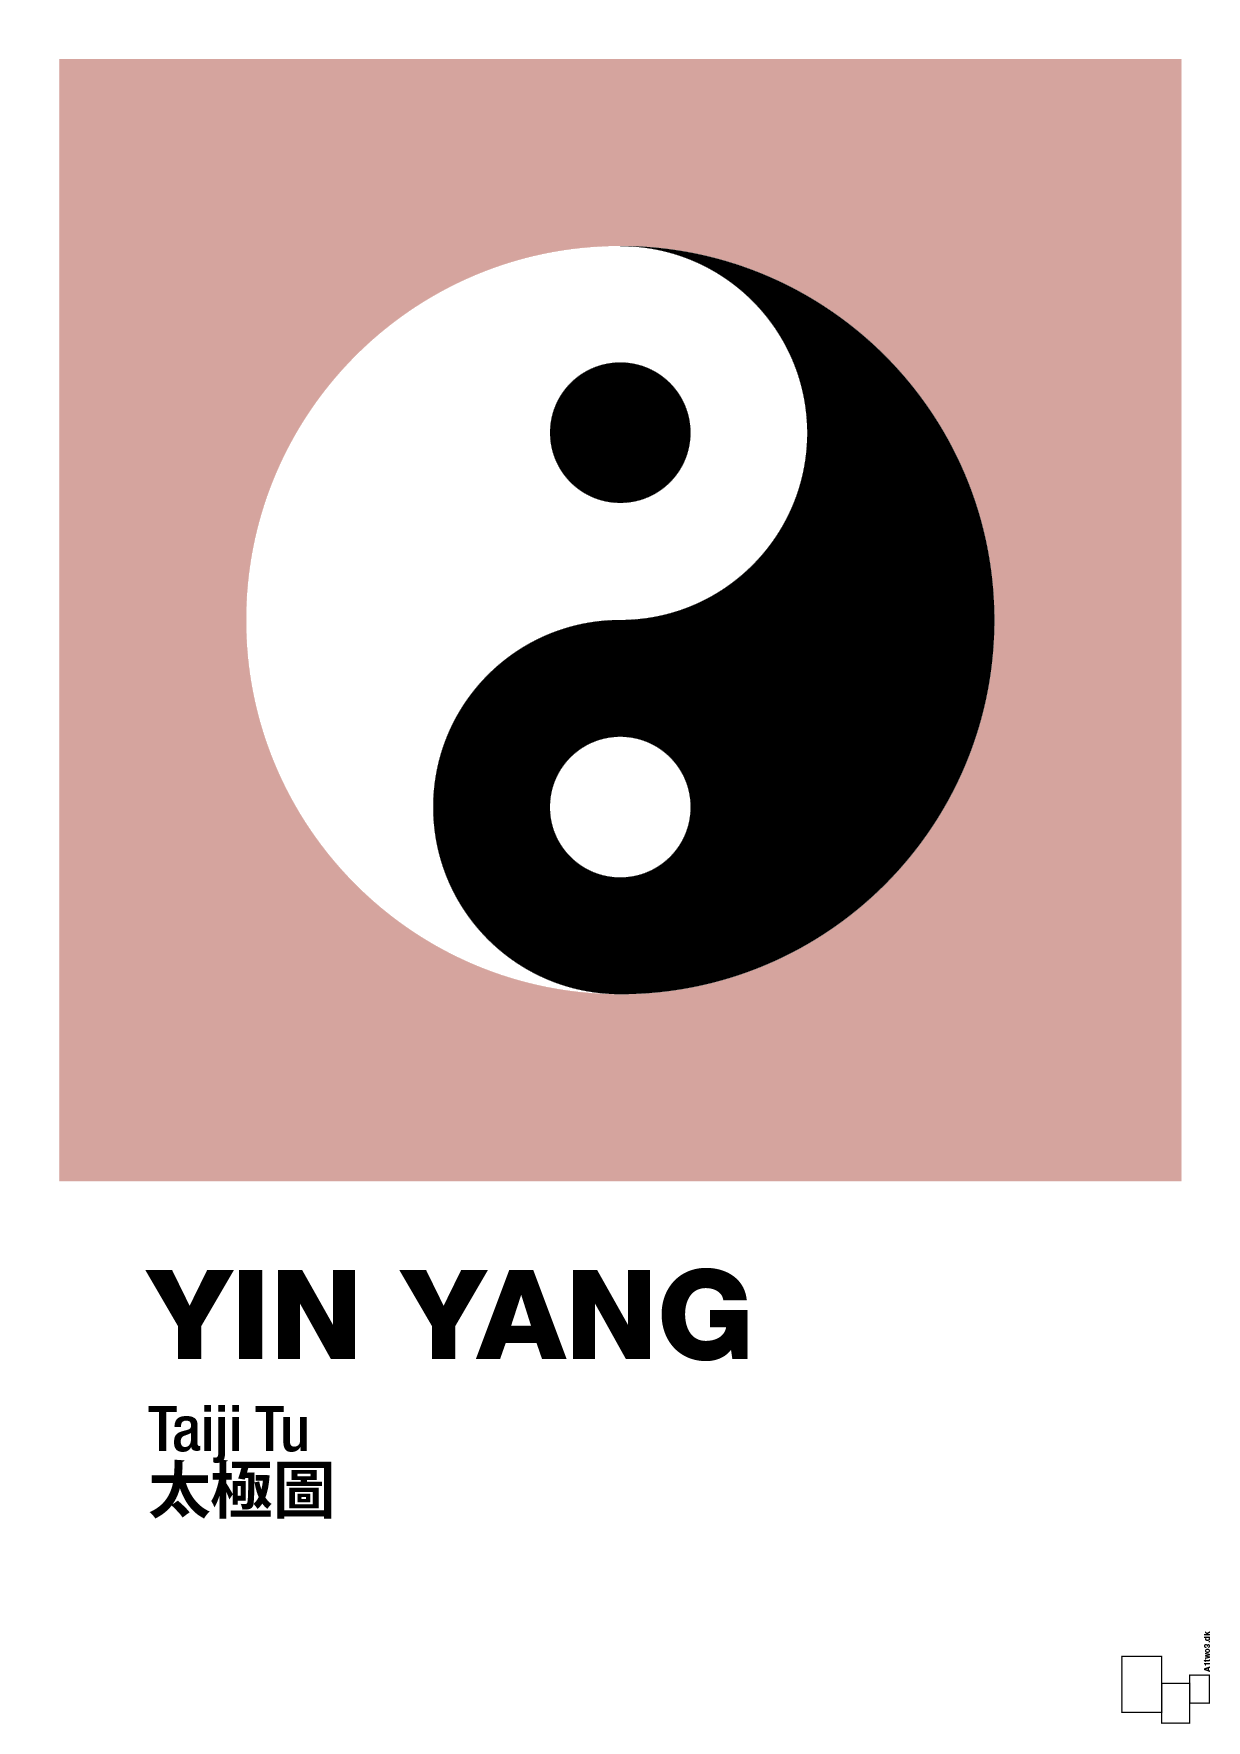 yin yang - Plakat med Videnskab i Bubble Shell